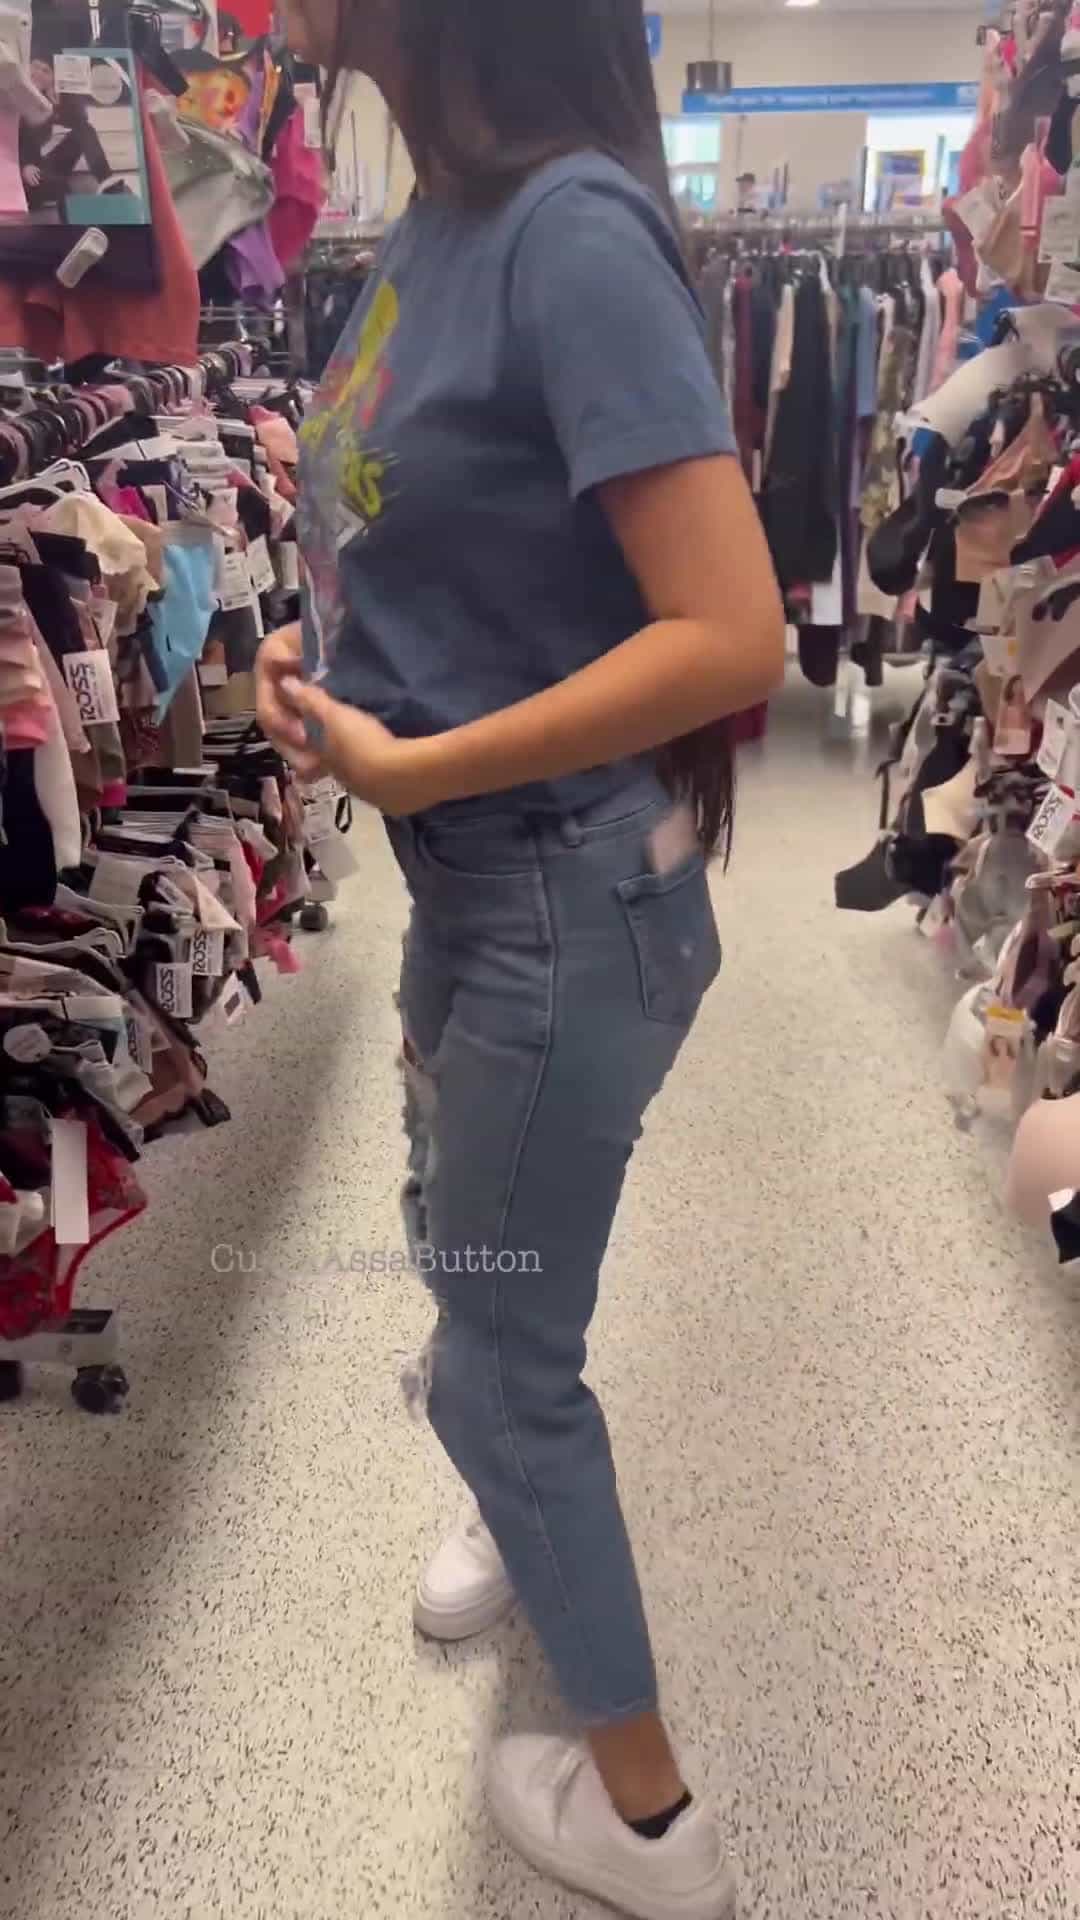 Shopping for a bra I’ll never wear:)